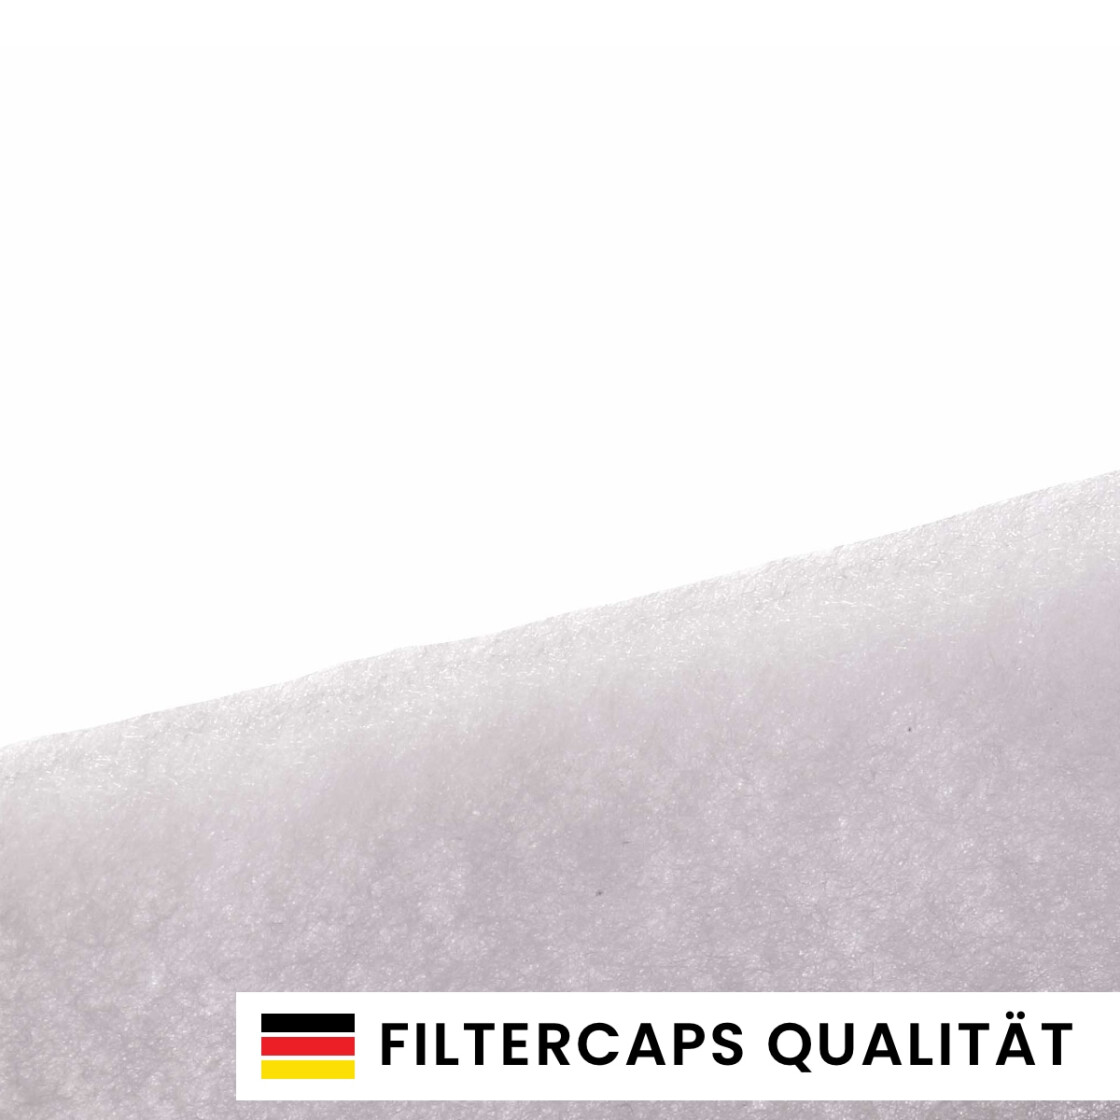 Luftfiltermatte G3 / ISO Coarse 45%, Stärke 7 - 10 mm